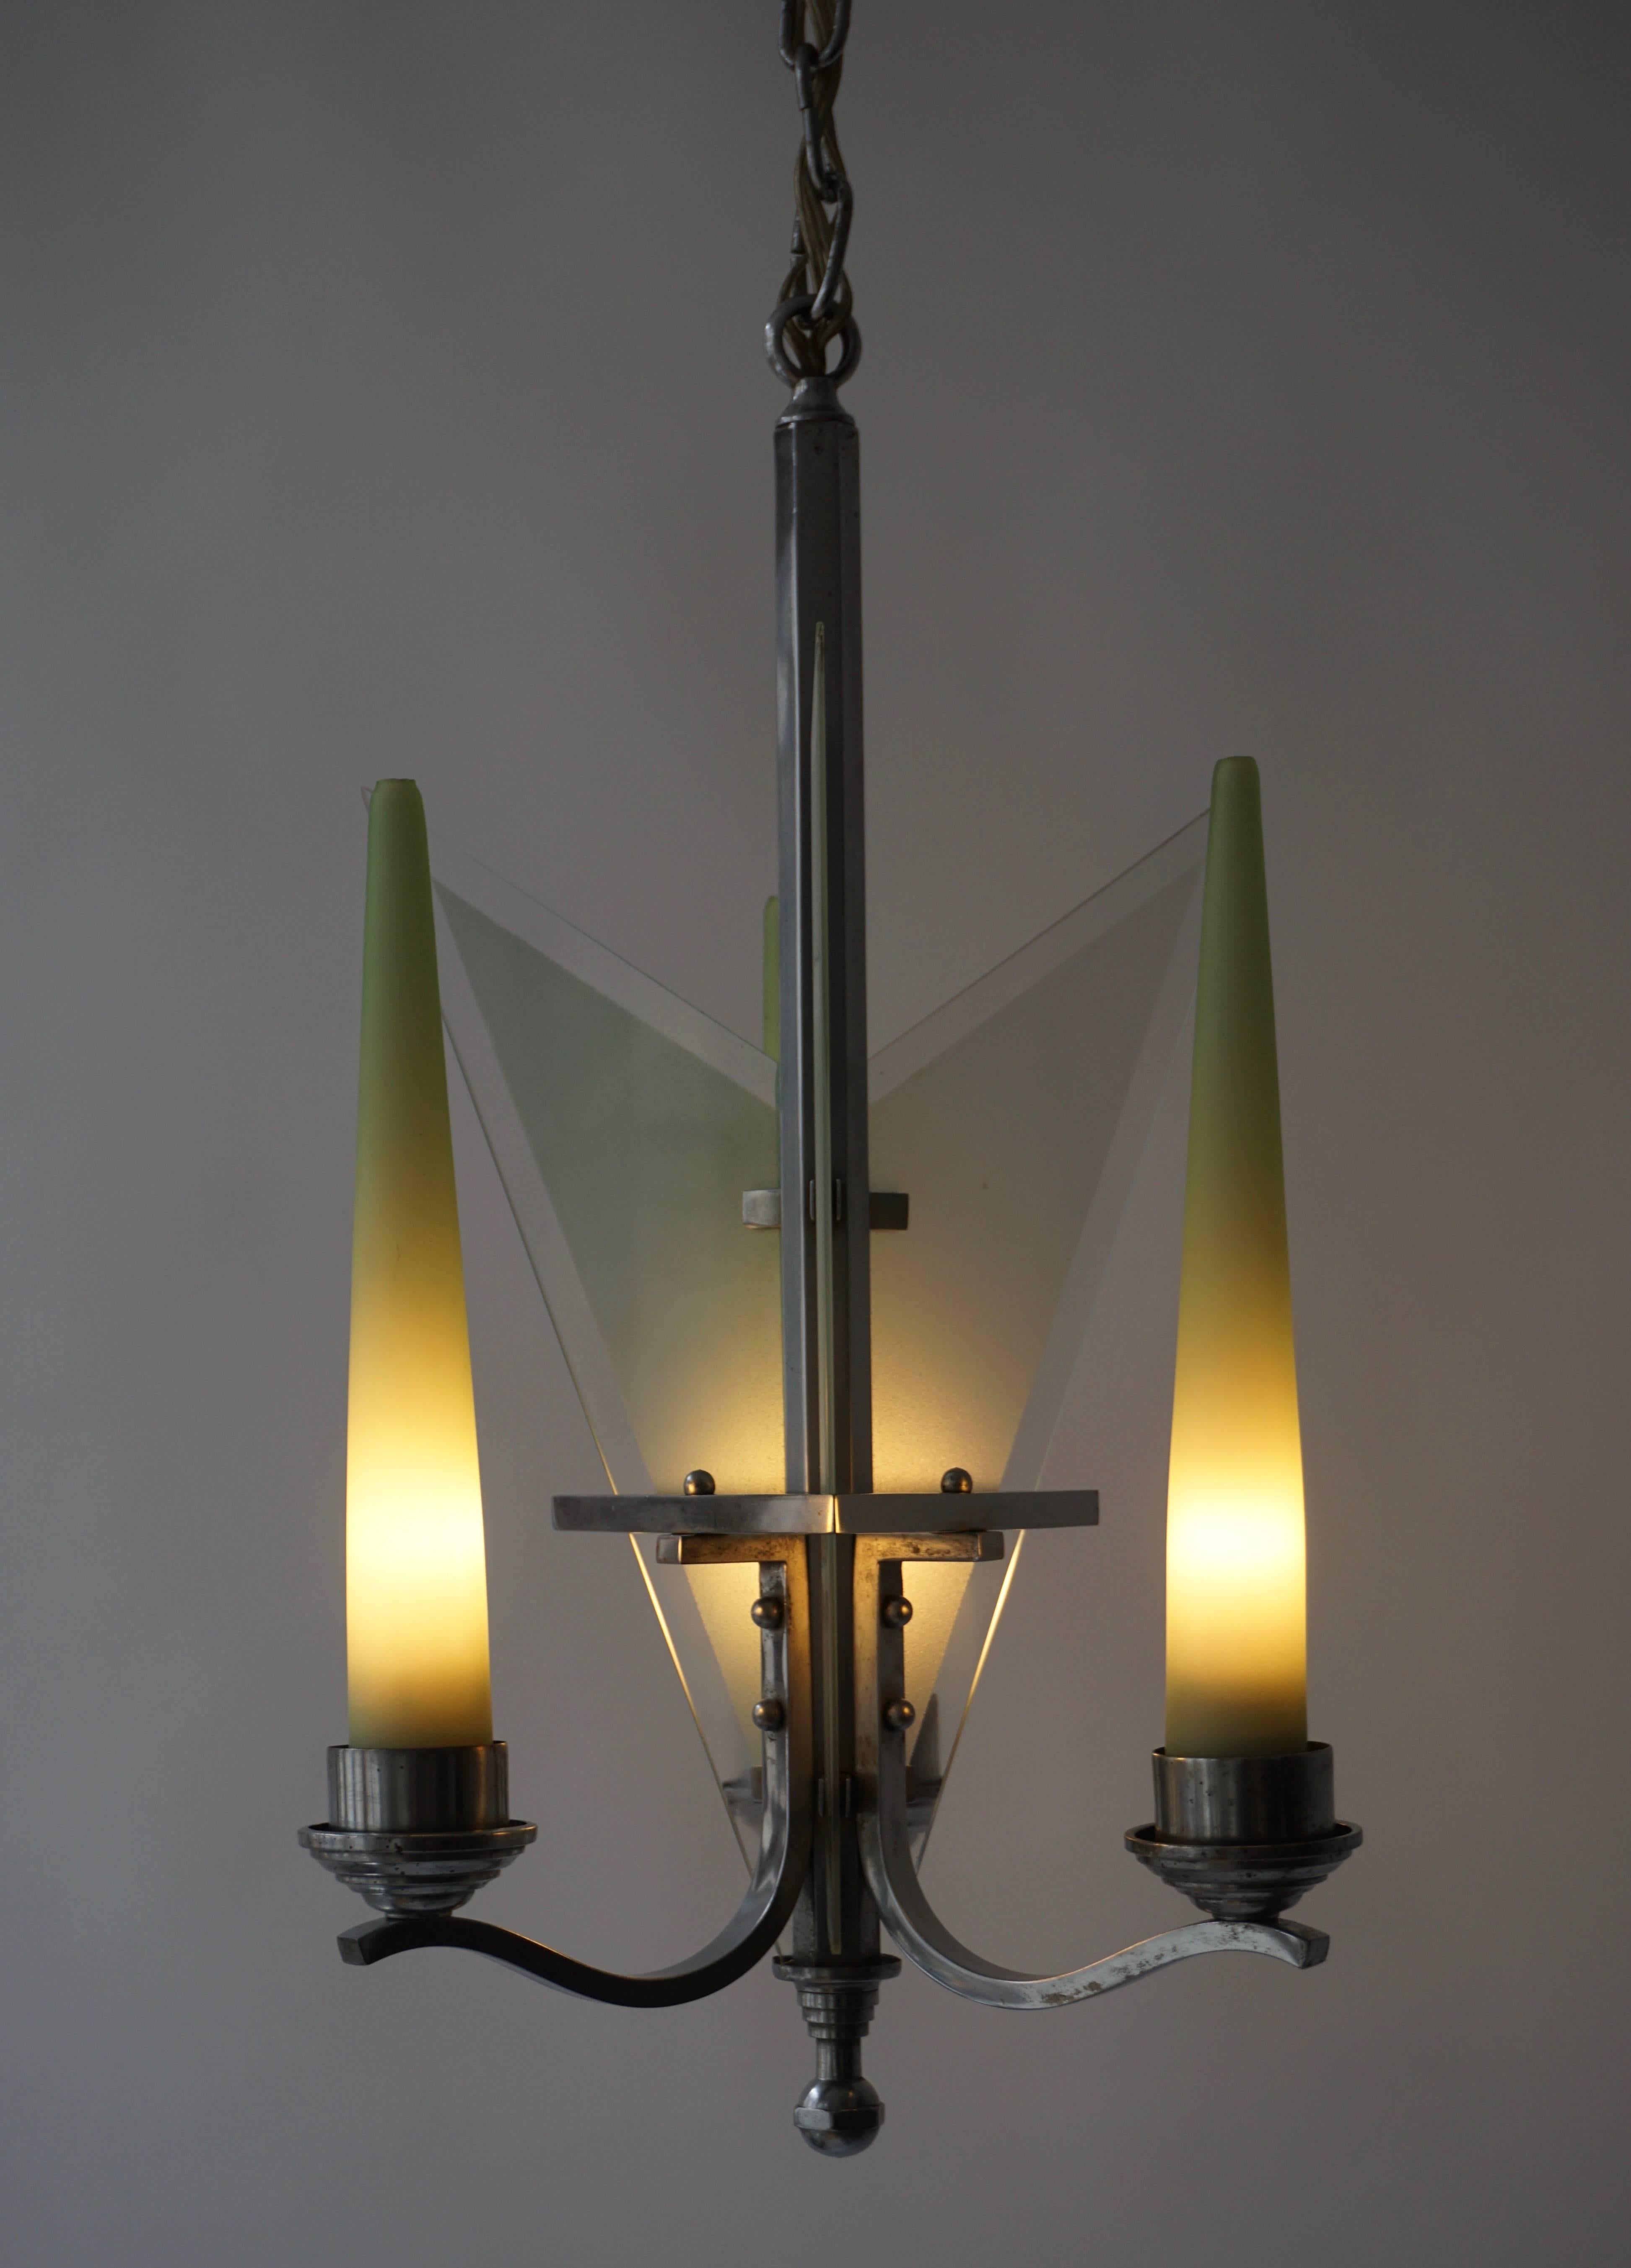 Italian Art Deco light fixture.
Total height with chain is 60 cm.
Three E14 bulbs.
 